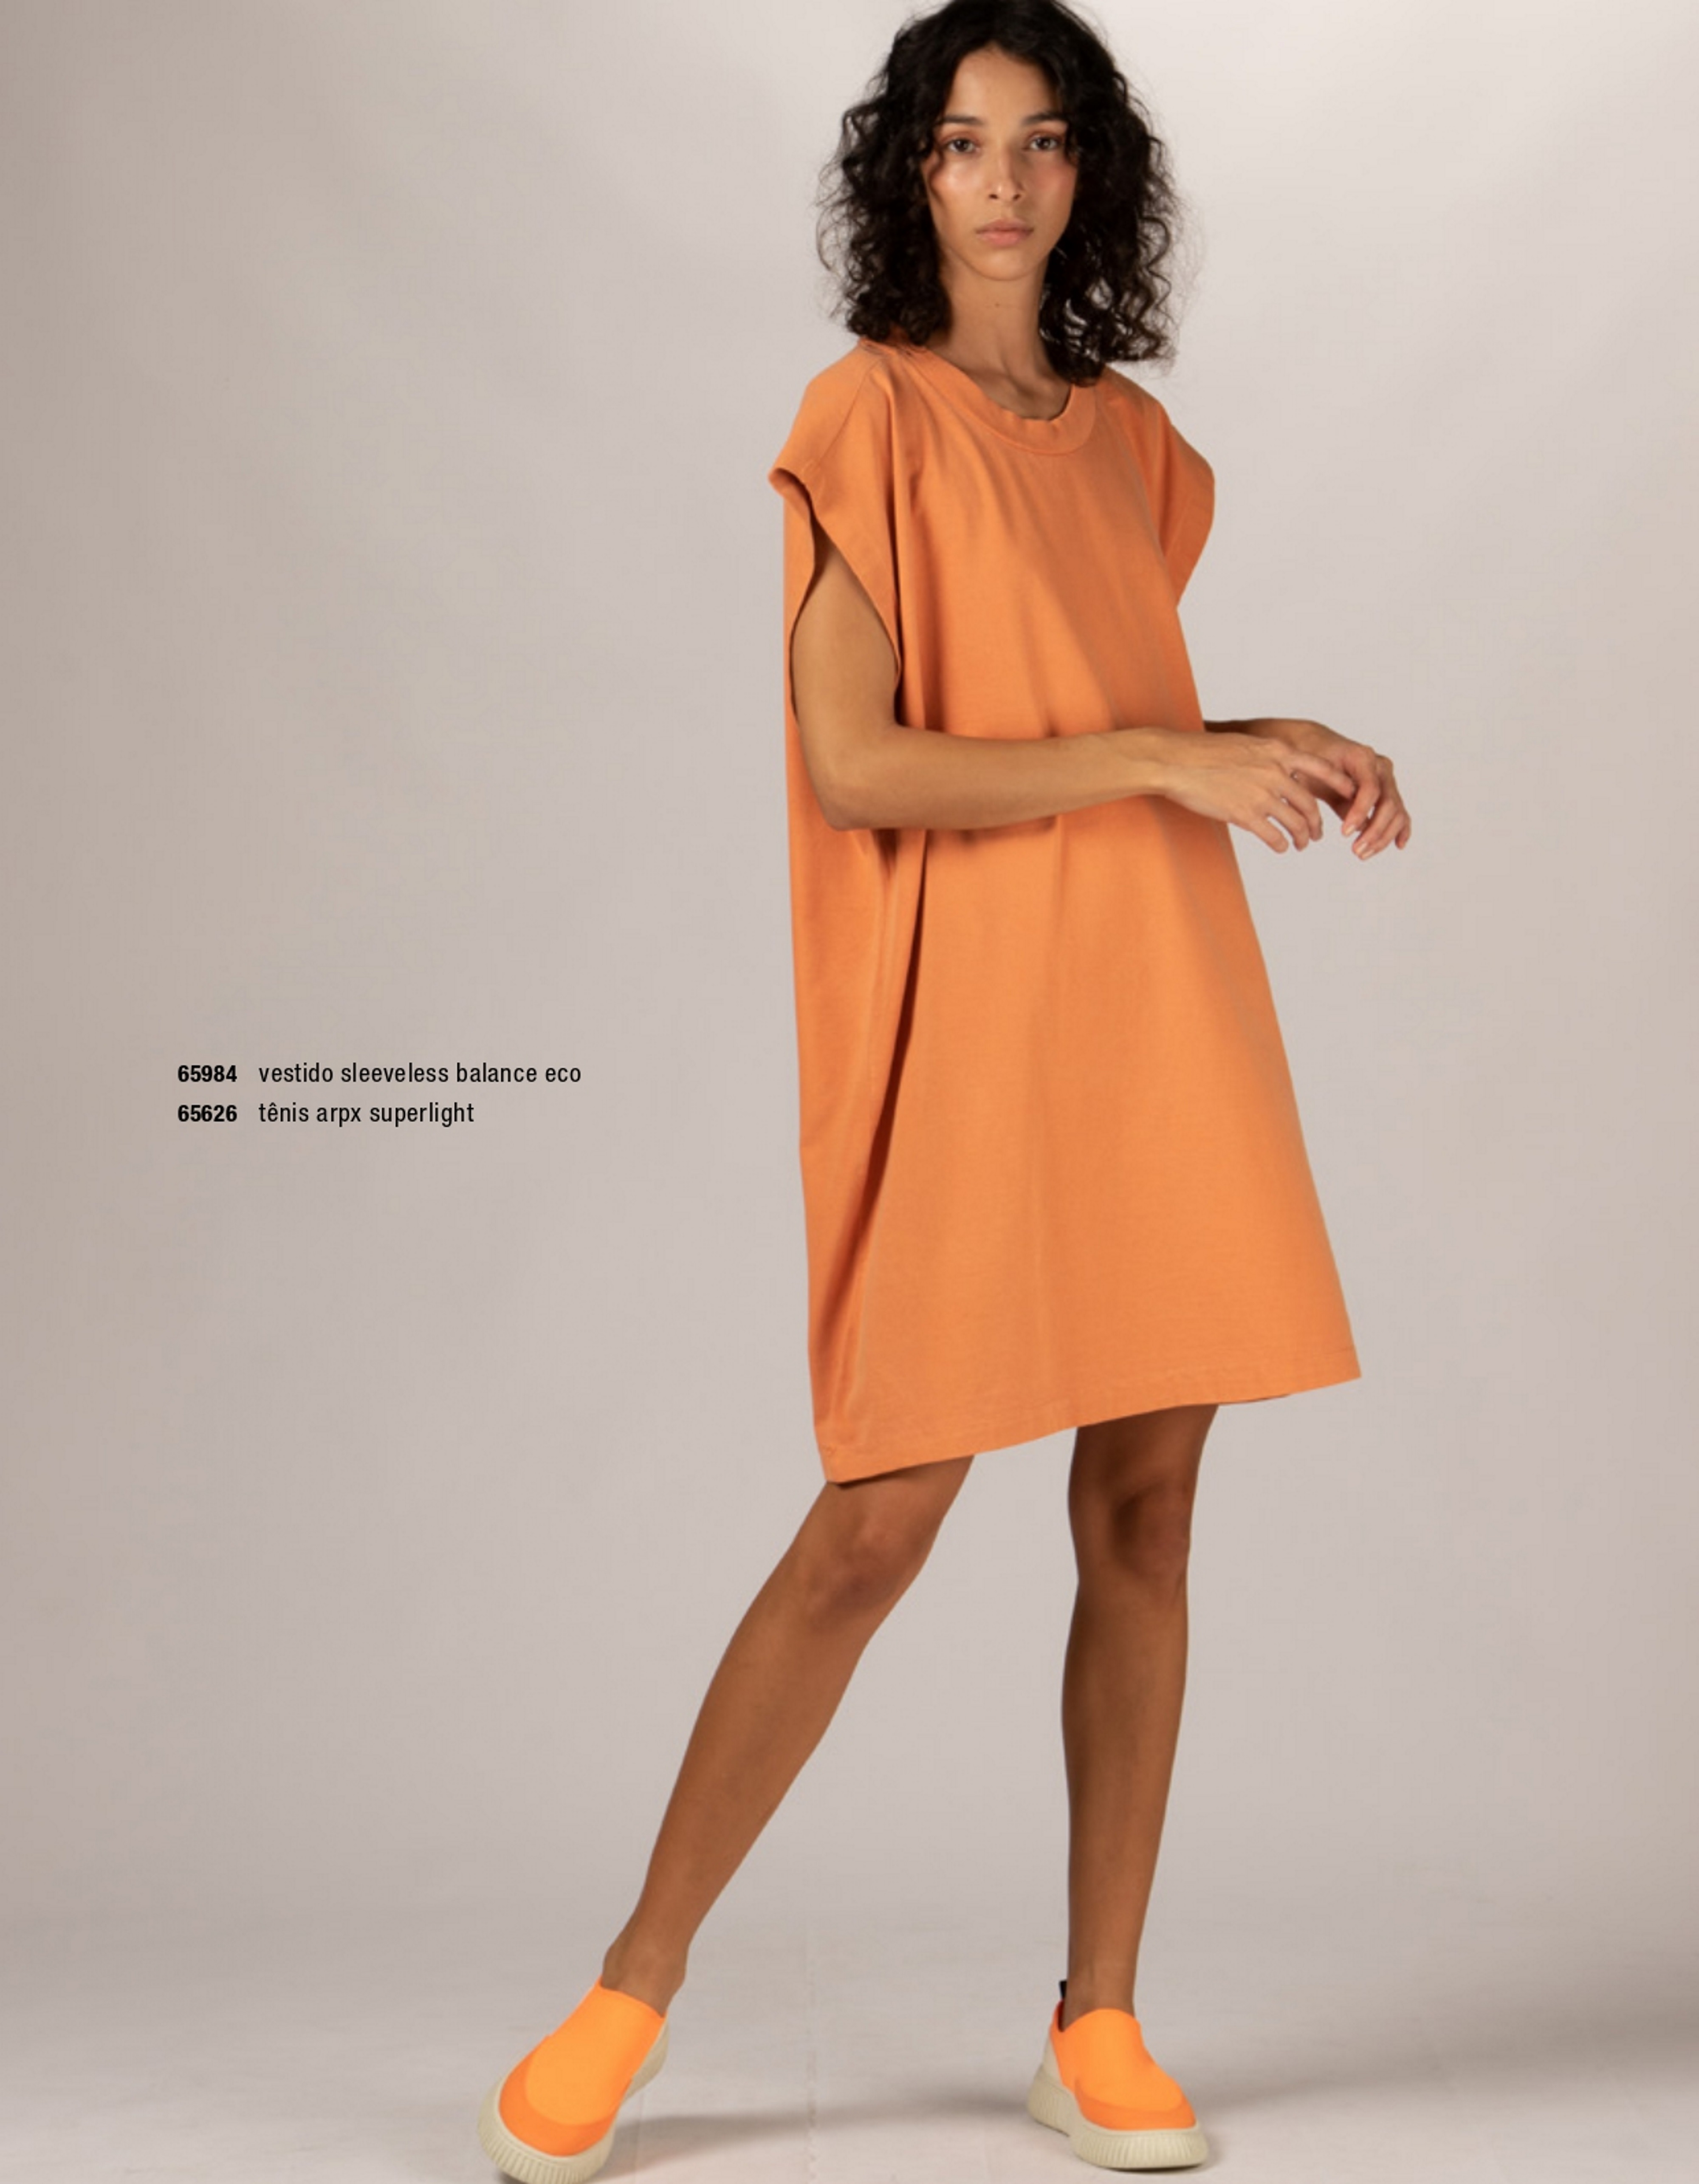 Vestido Sleeveless Balance ECO_PVP 105€ (laranja) + Tenis Arpx Super Light_PVP 173€